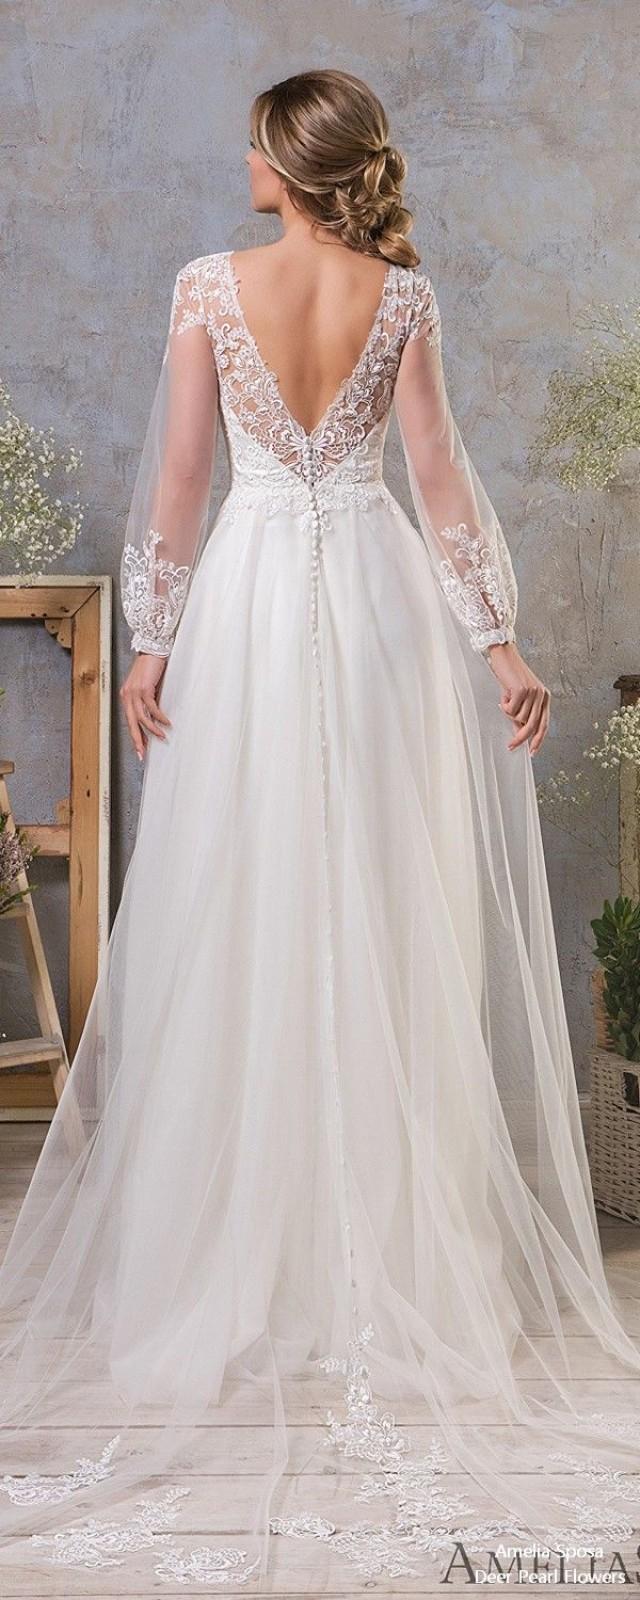 amelia sposa wedding dresses 2019